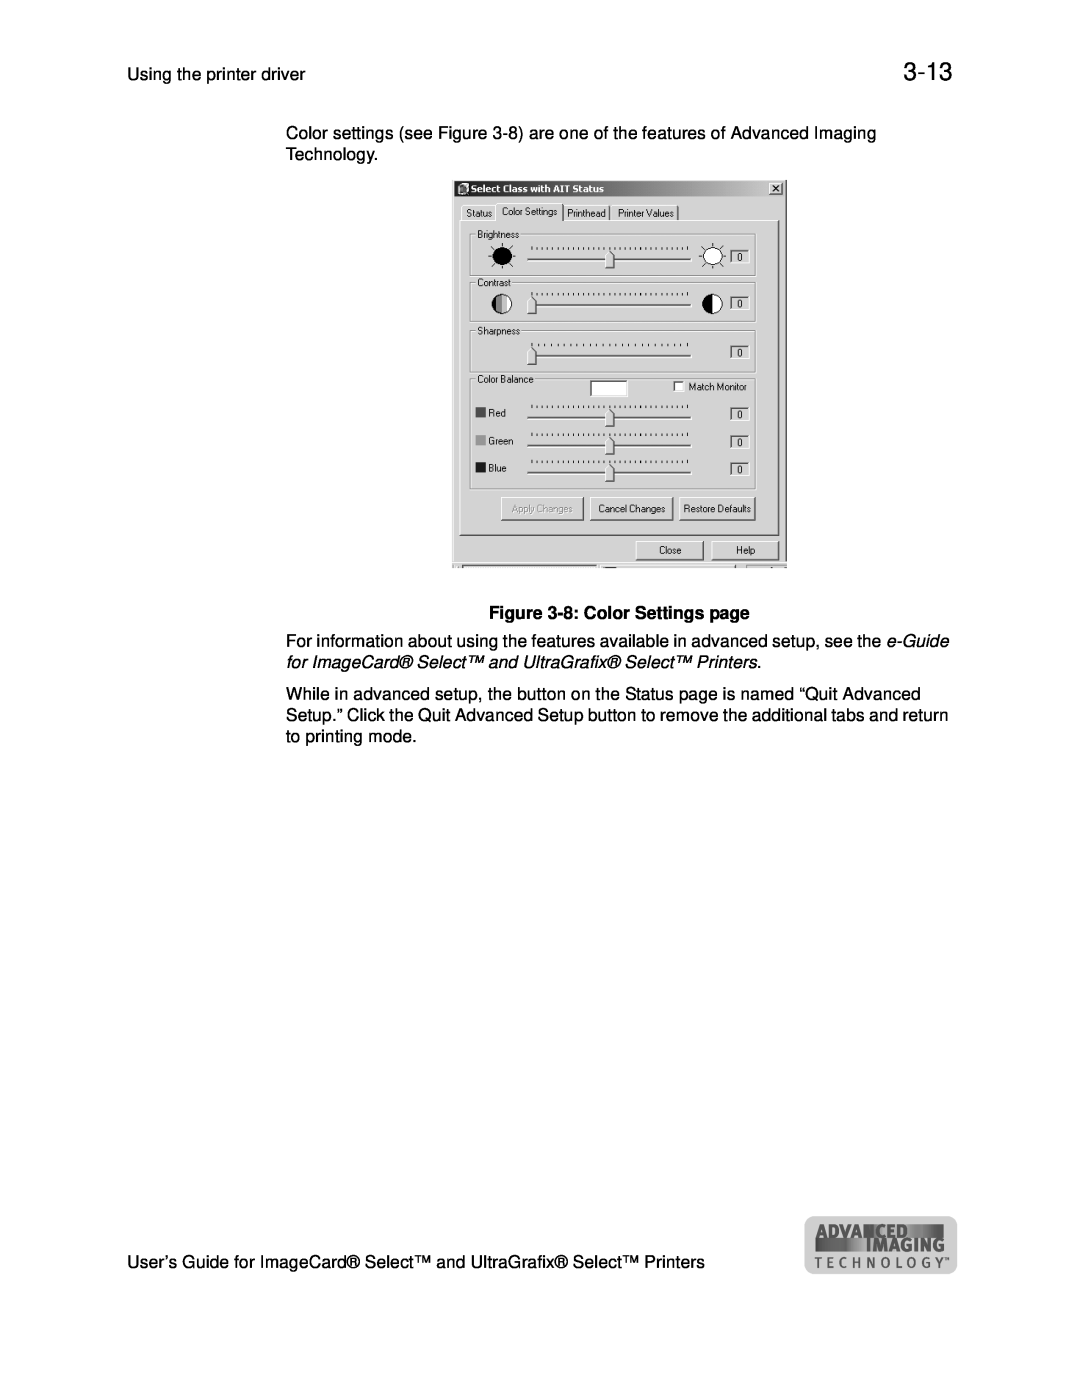 Datacard Group ImageCard SelectTM and UltraGrafix SelectTM Printers manual 3-13, 8 Color Settings page 